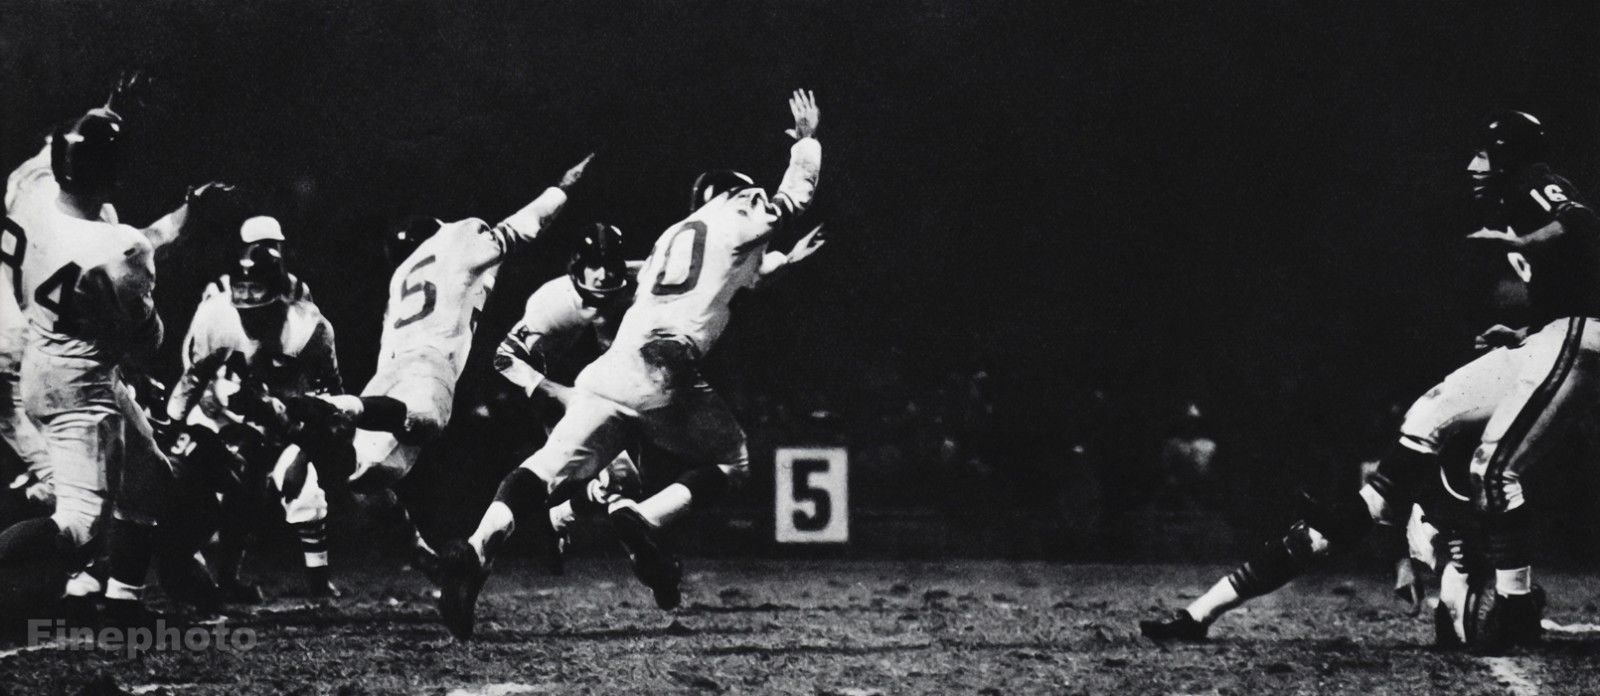 1950s-NFL-FOOTBALL-Chicago-Bears-GEORGE-BLANDA-Fossil.jpg